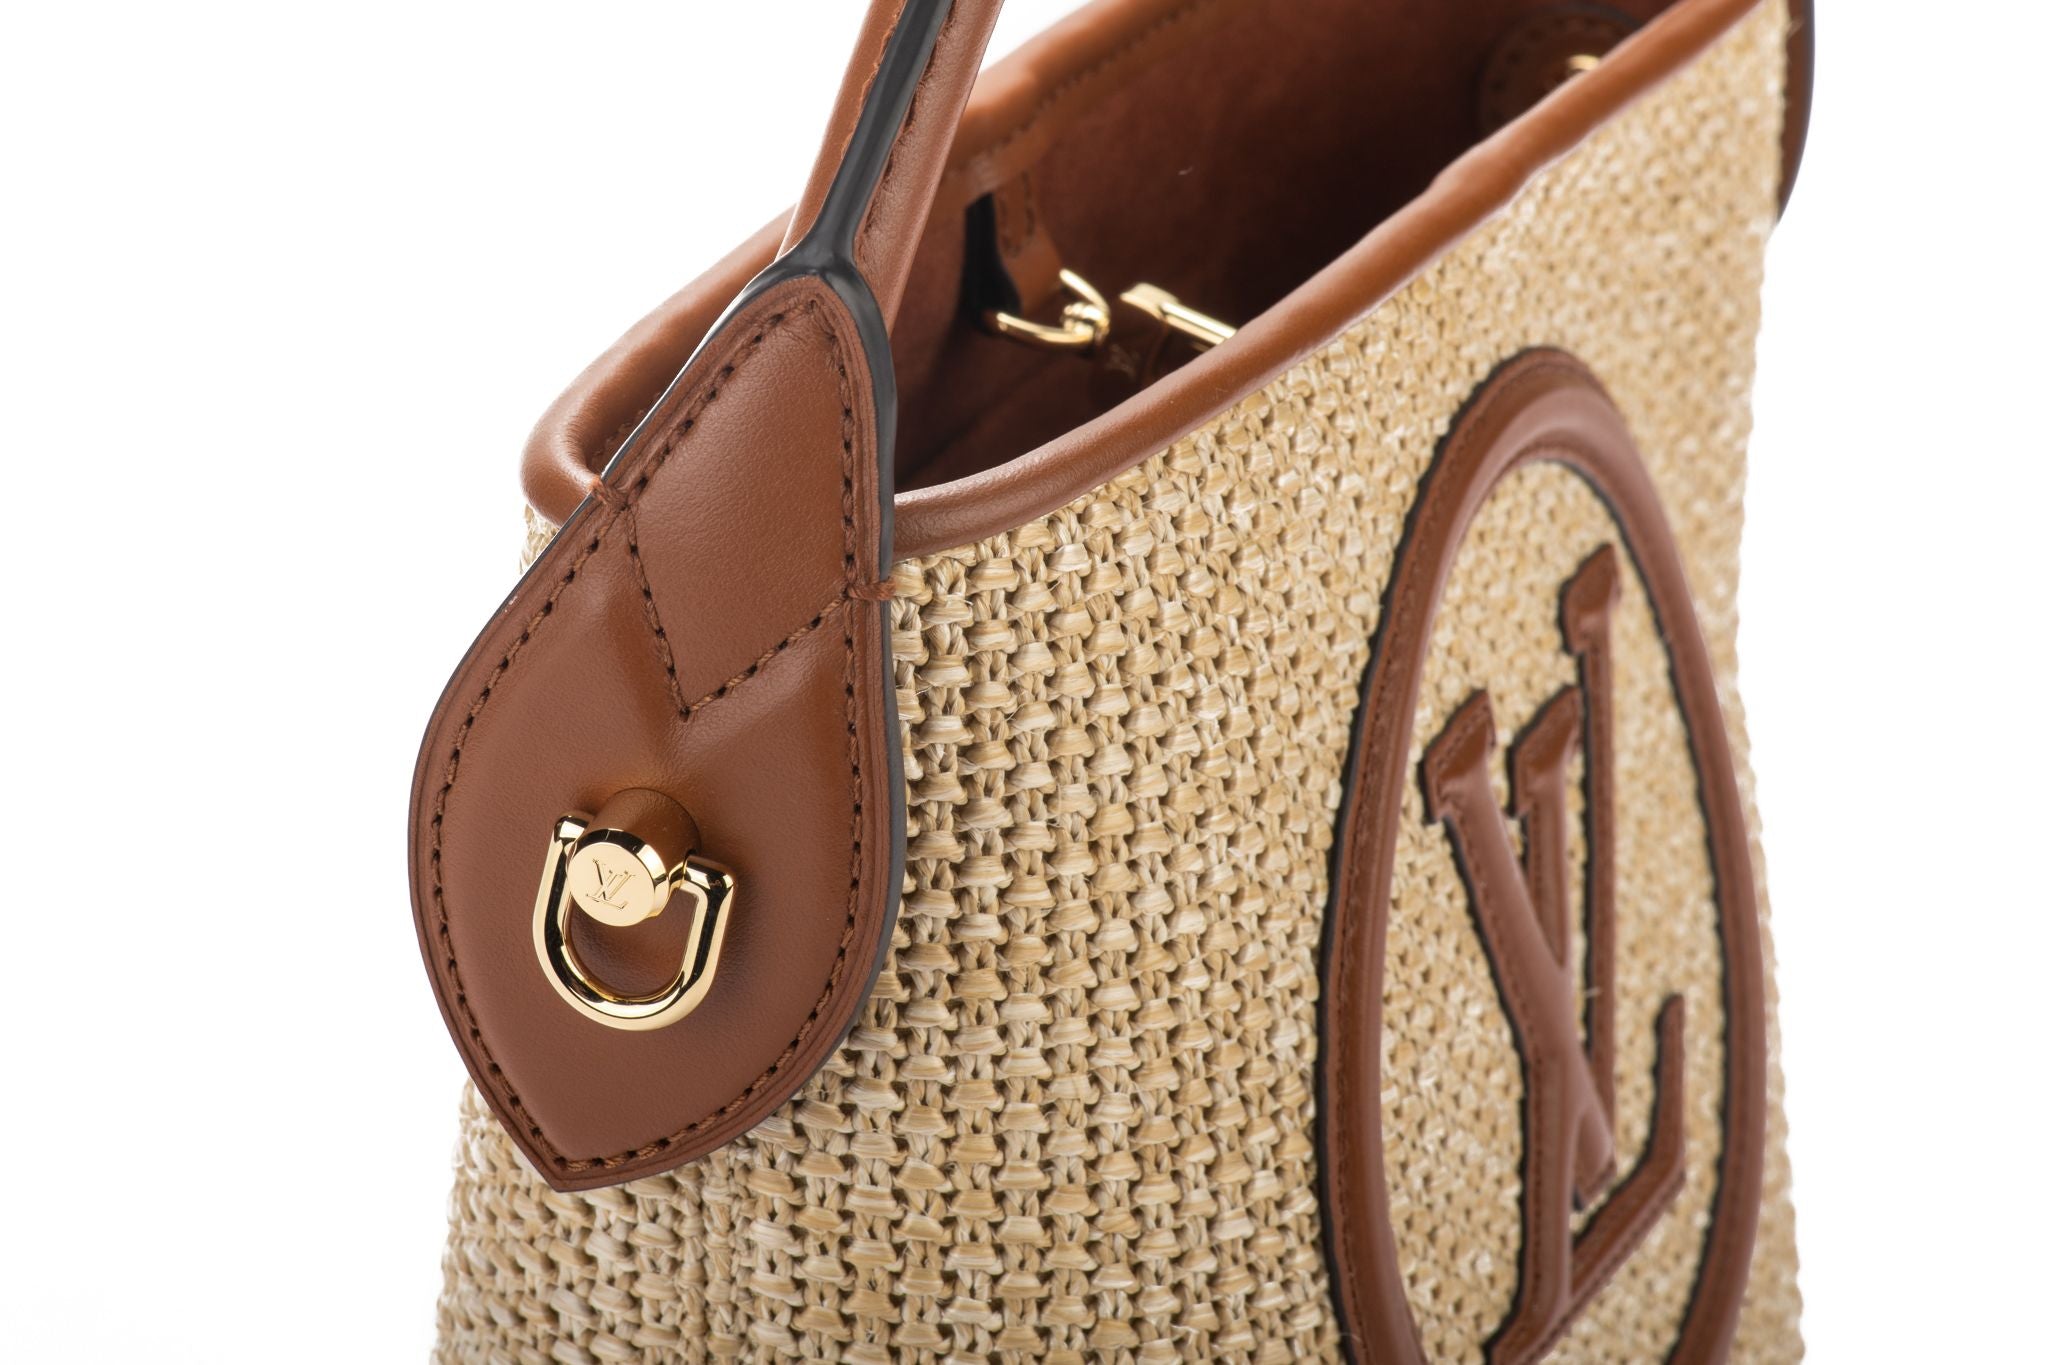 Louis Vuitton Monogram Raffia Petite Bucket Bag in Beige